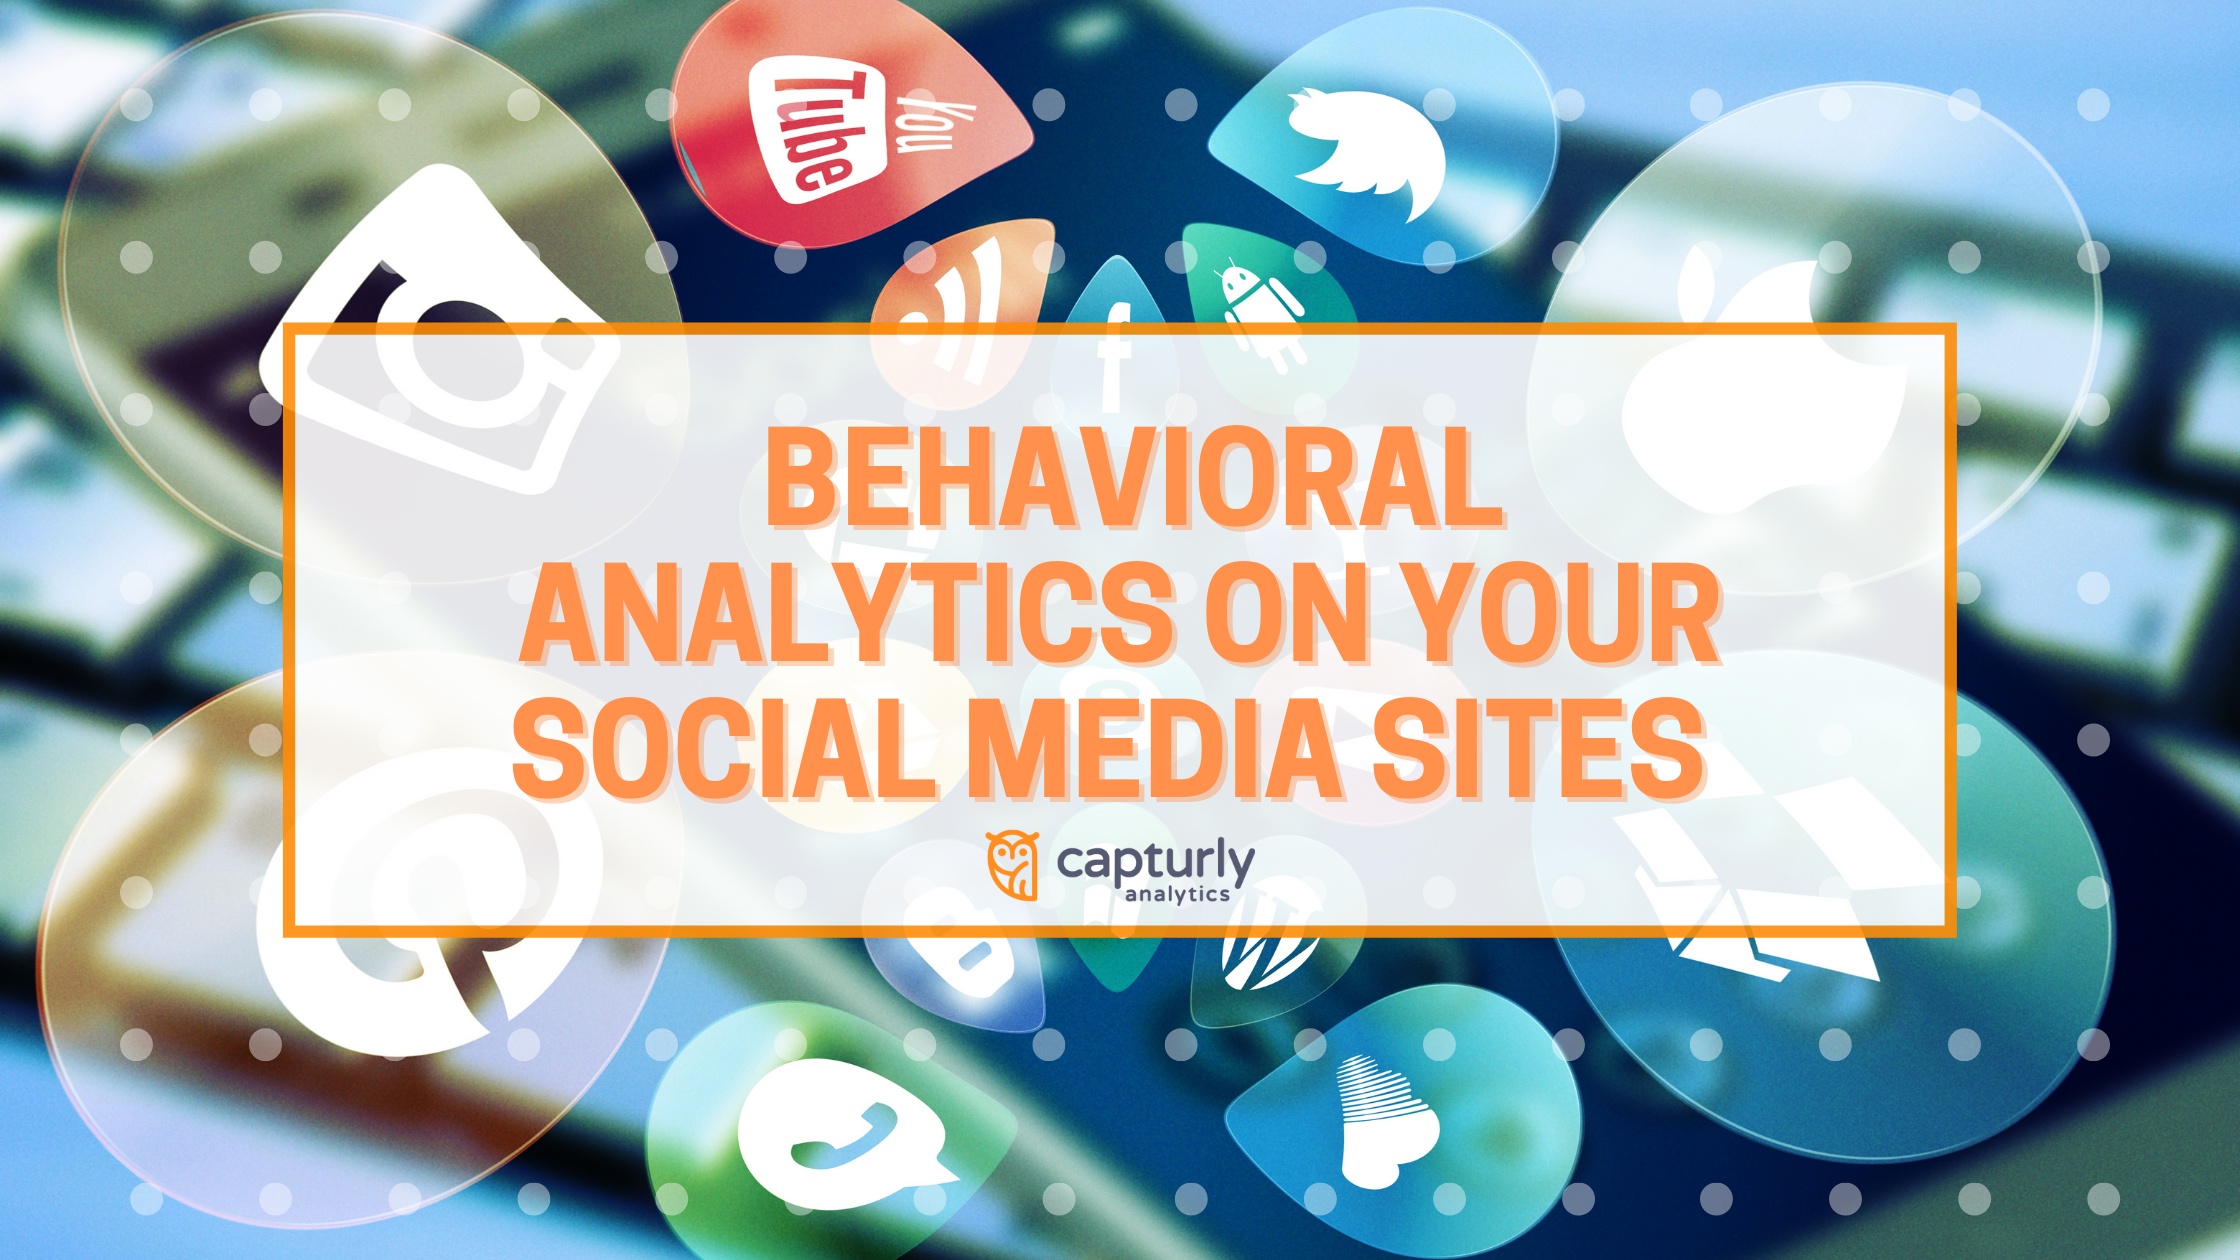 Behavioral analytics on social media sites